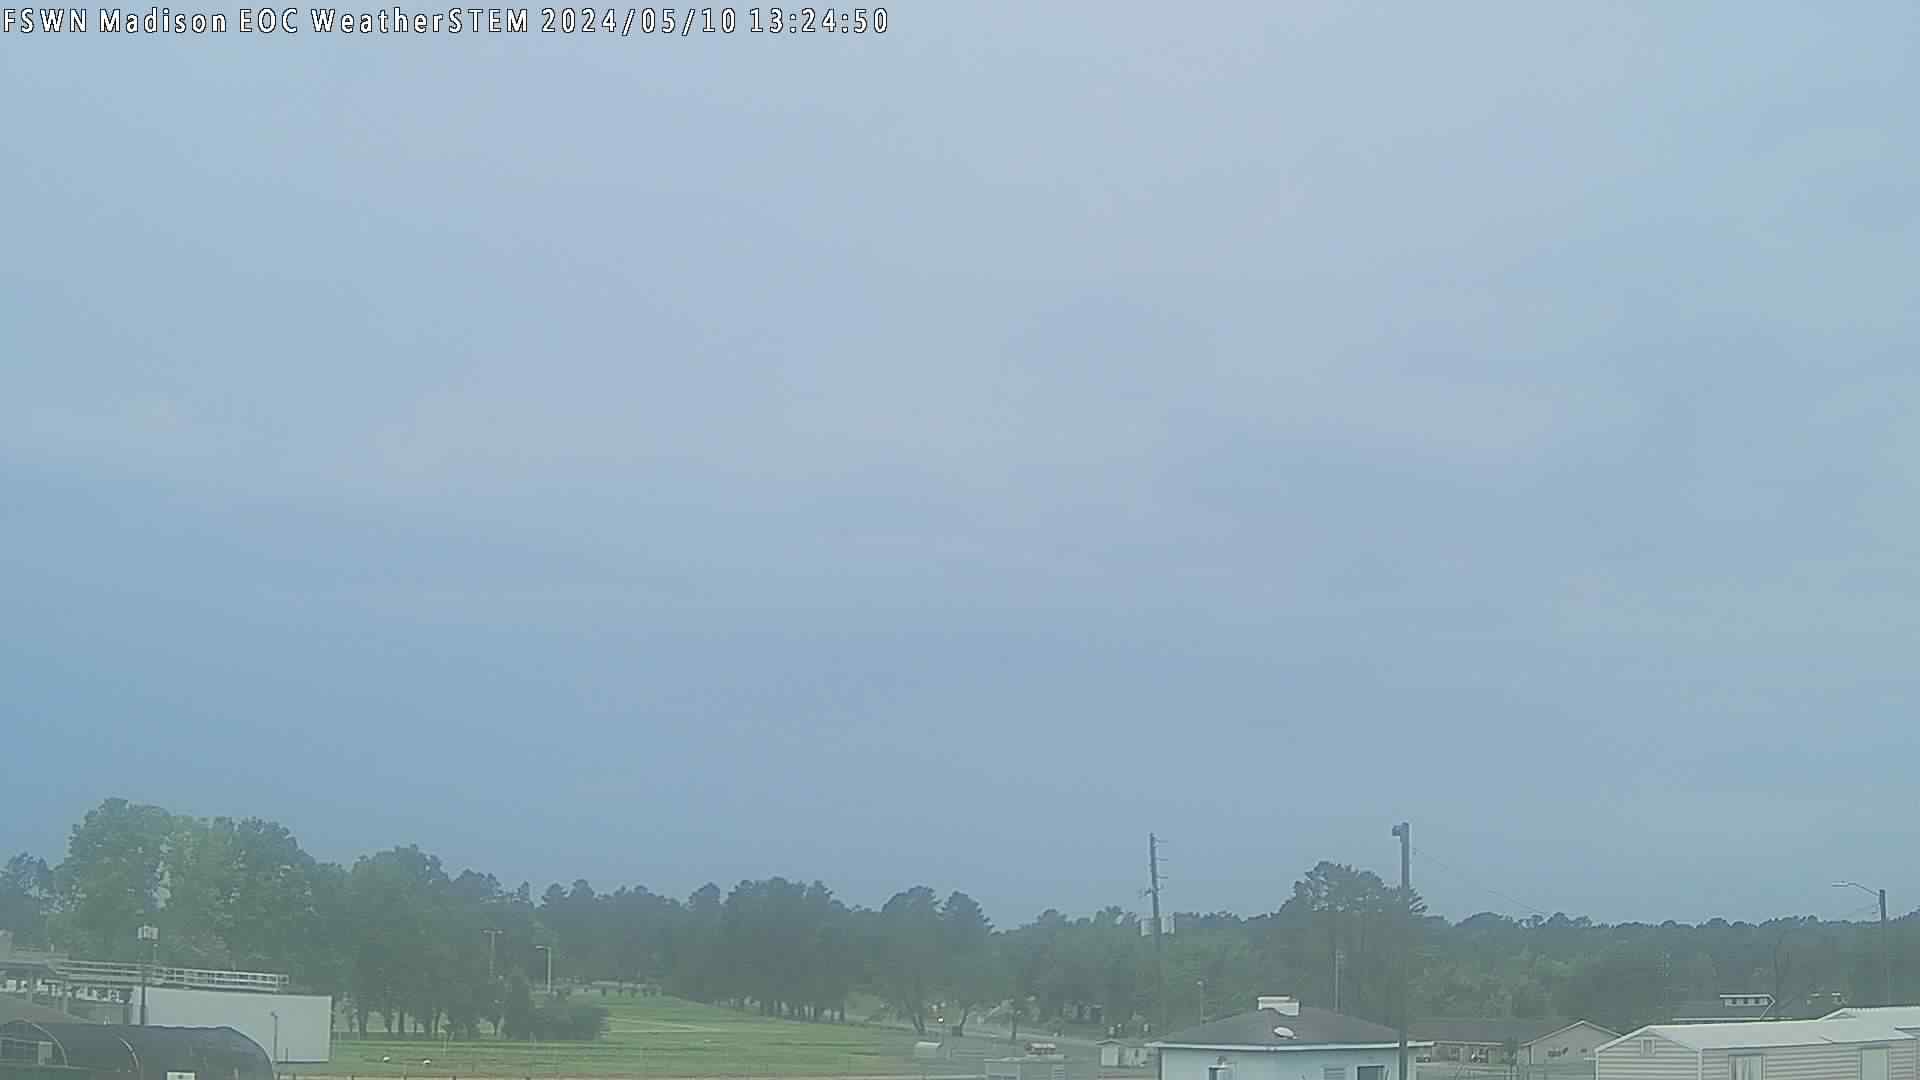  WeatherSTEM Cloud Camera FSWNMadisonEOC in Madison County, Florida FL at FSWN Madison County EOC